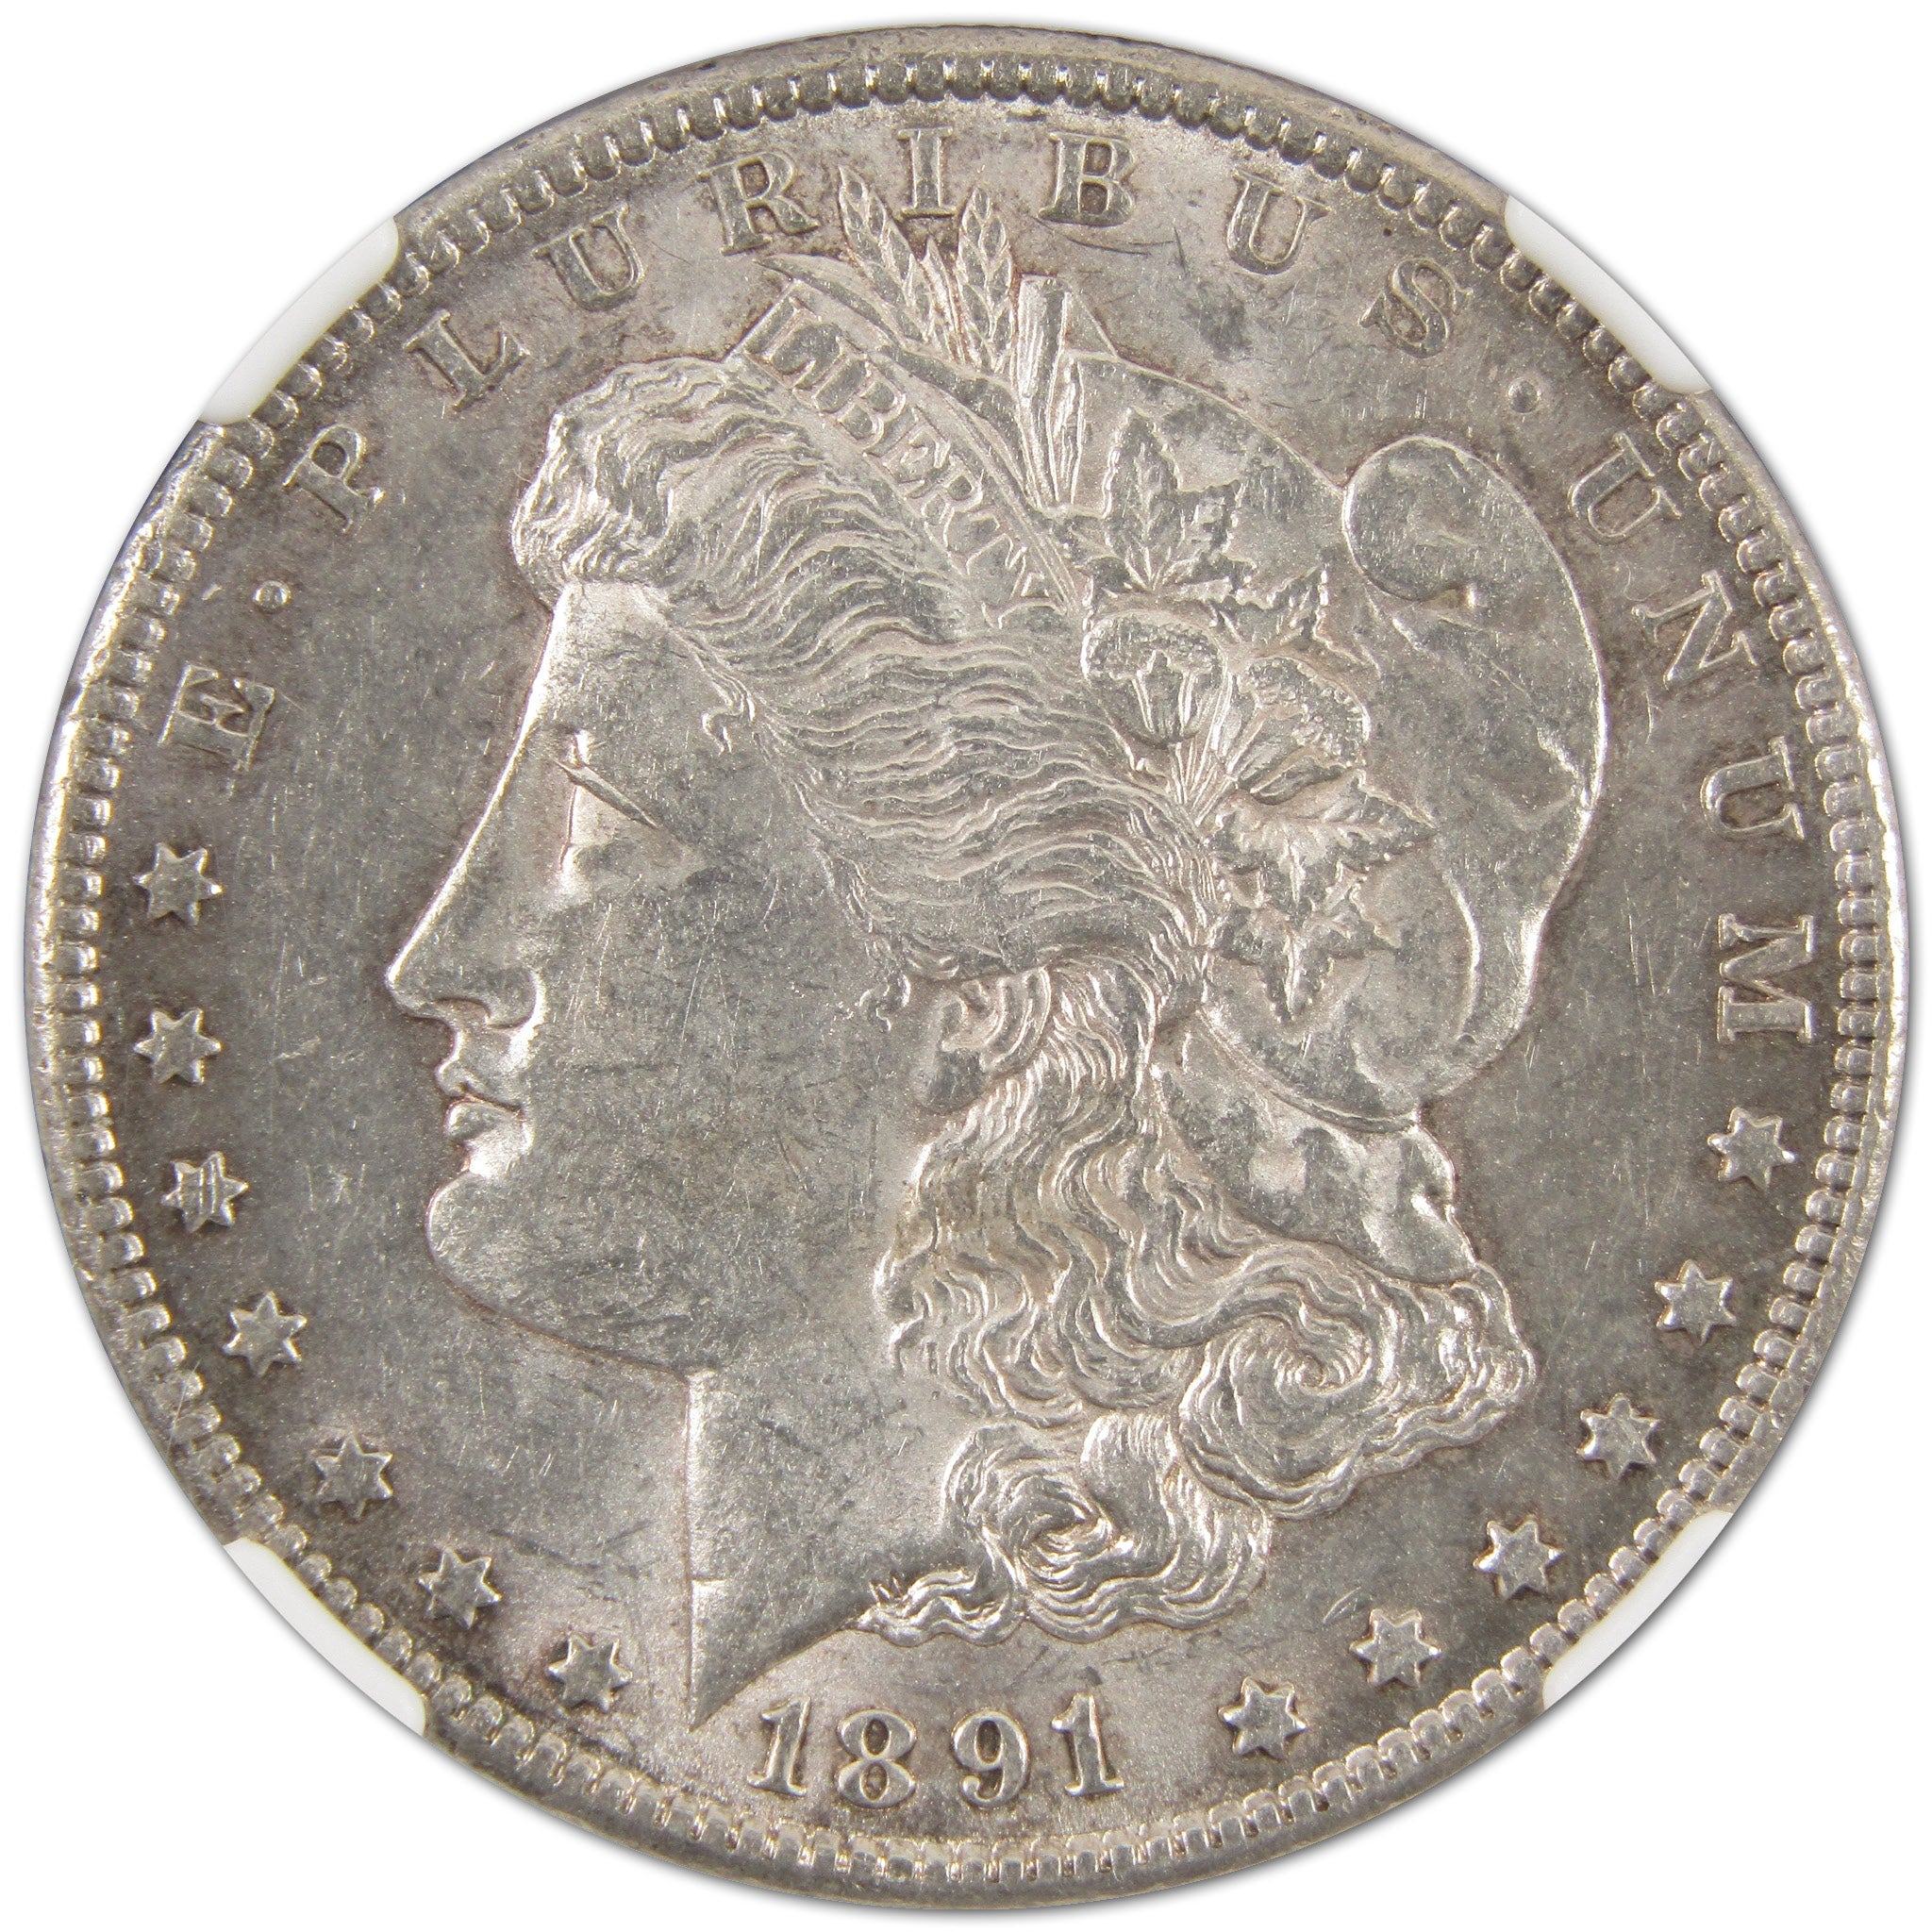 1891 CC Morgan Dollar AU 58 NGC Silver $1 Coin SKU:I10923 - Morgan coin - Morgan silver dollar - Morgan silver dollar for sale - Profile Coins &amp; Collectibles